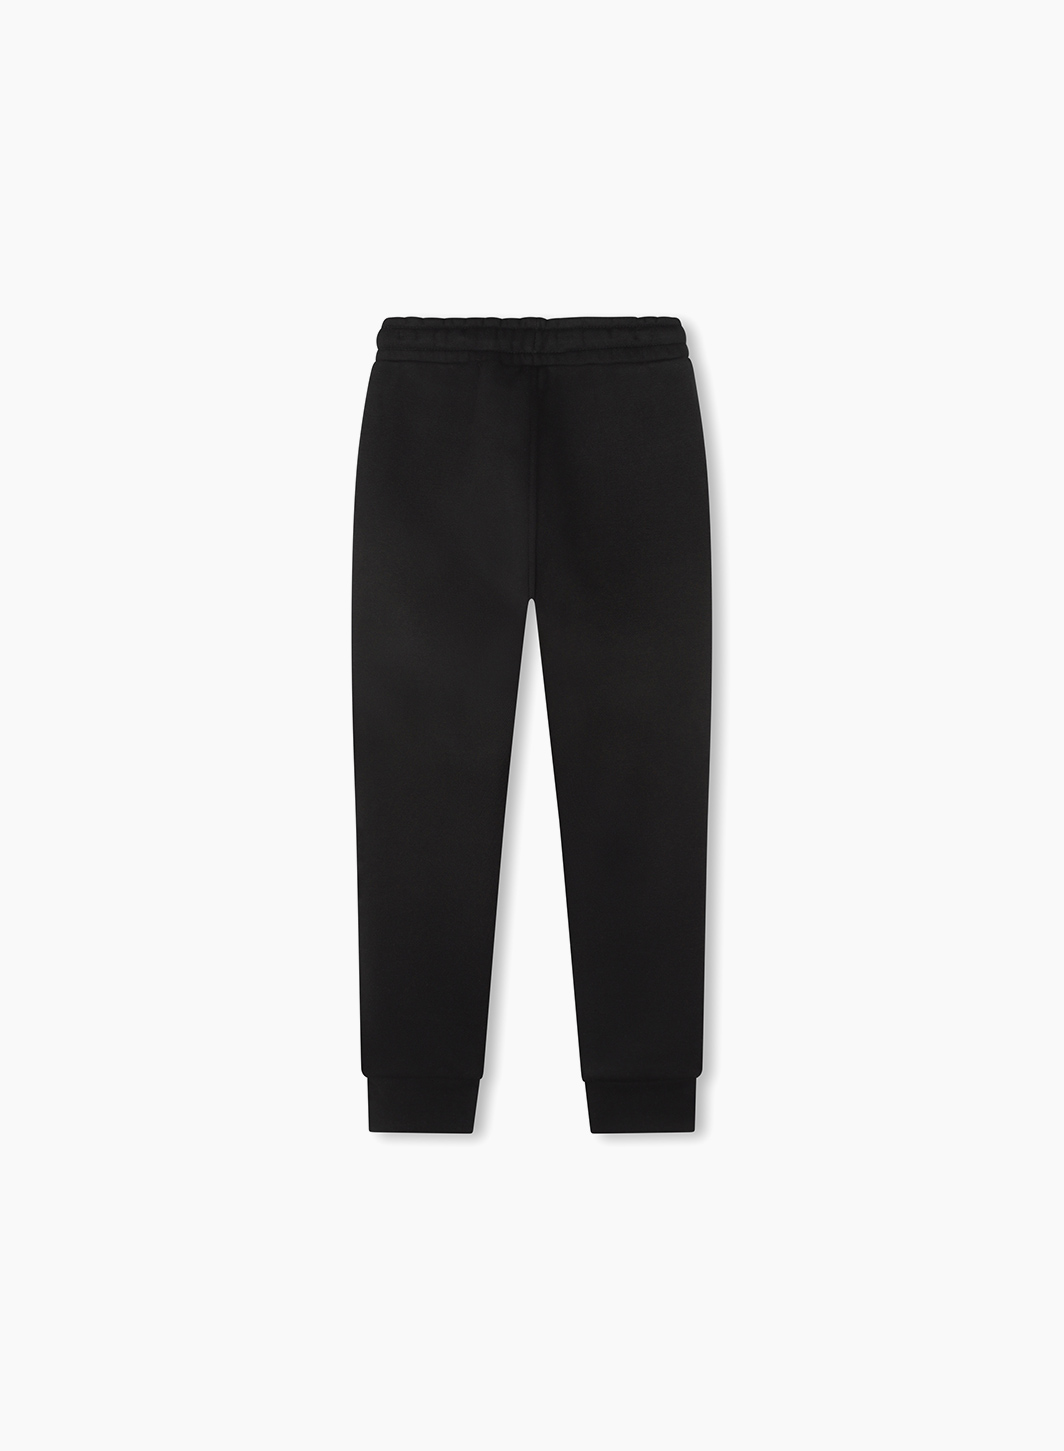 Cotton stylish sport trousers, Pants, Boys